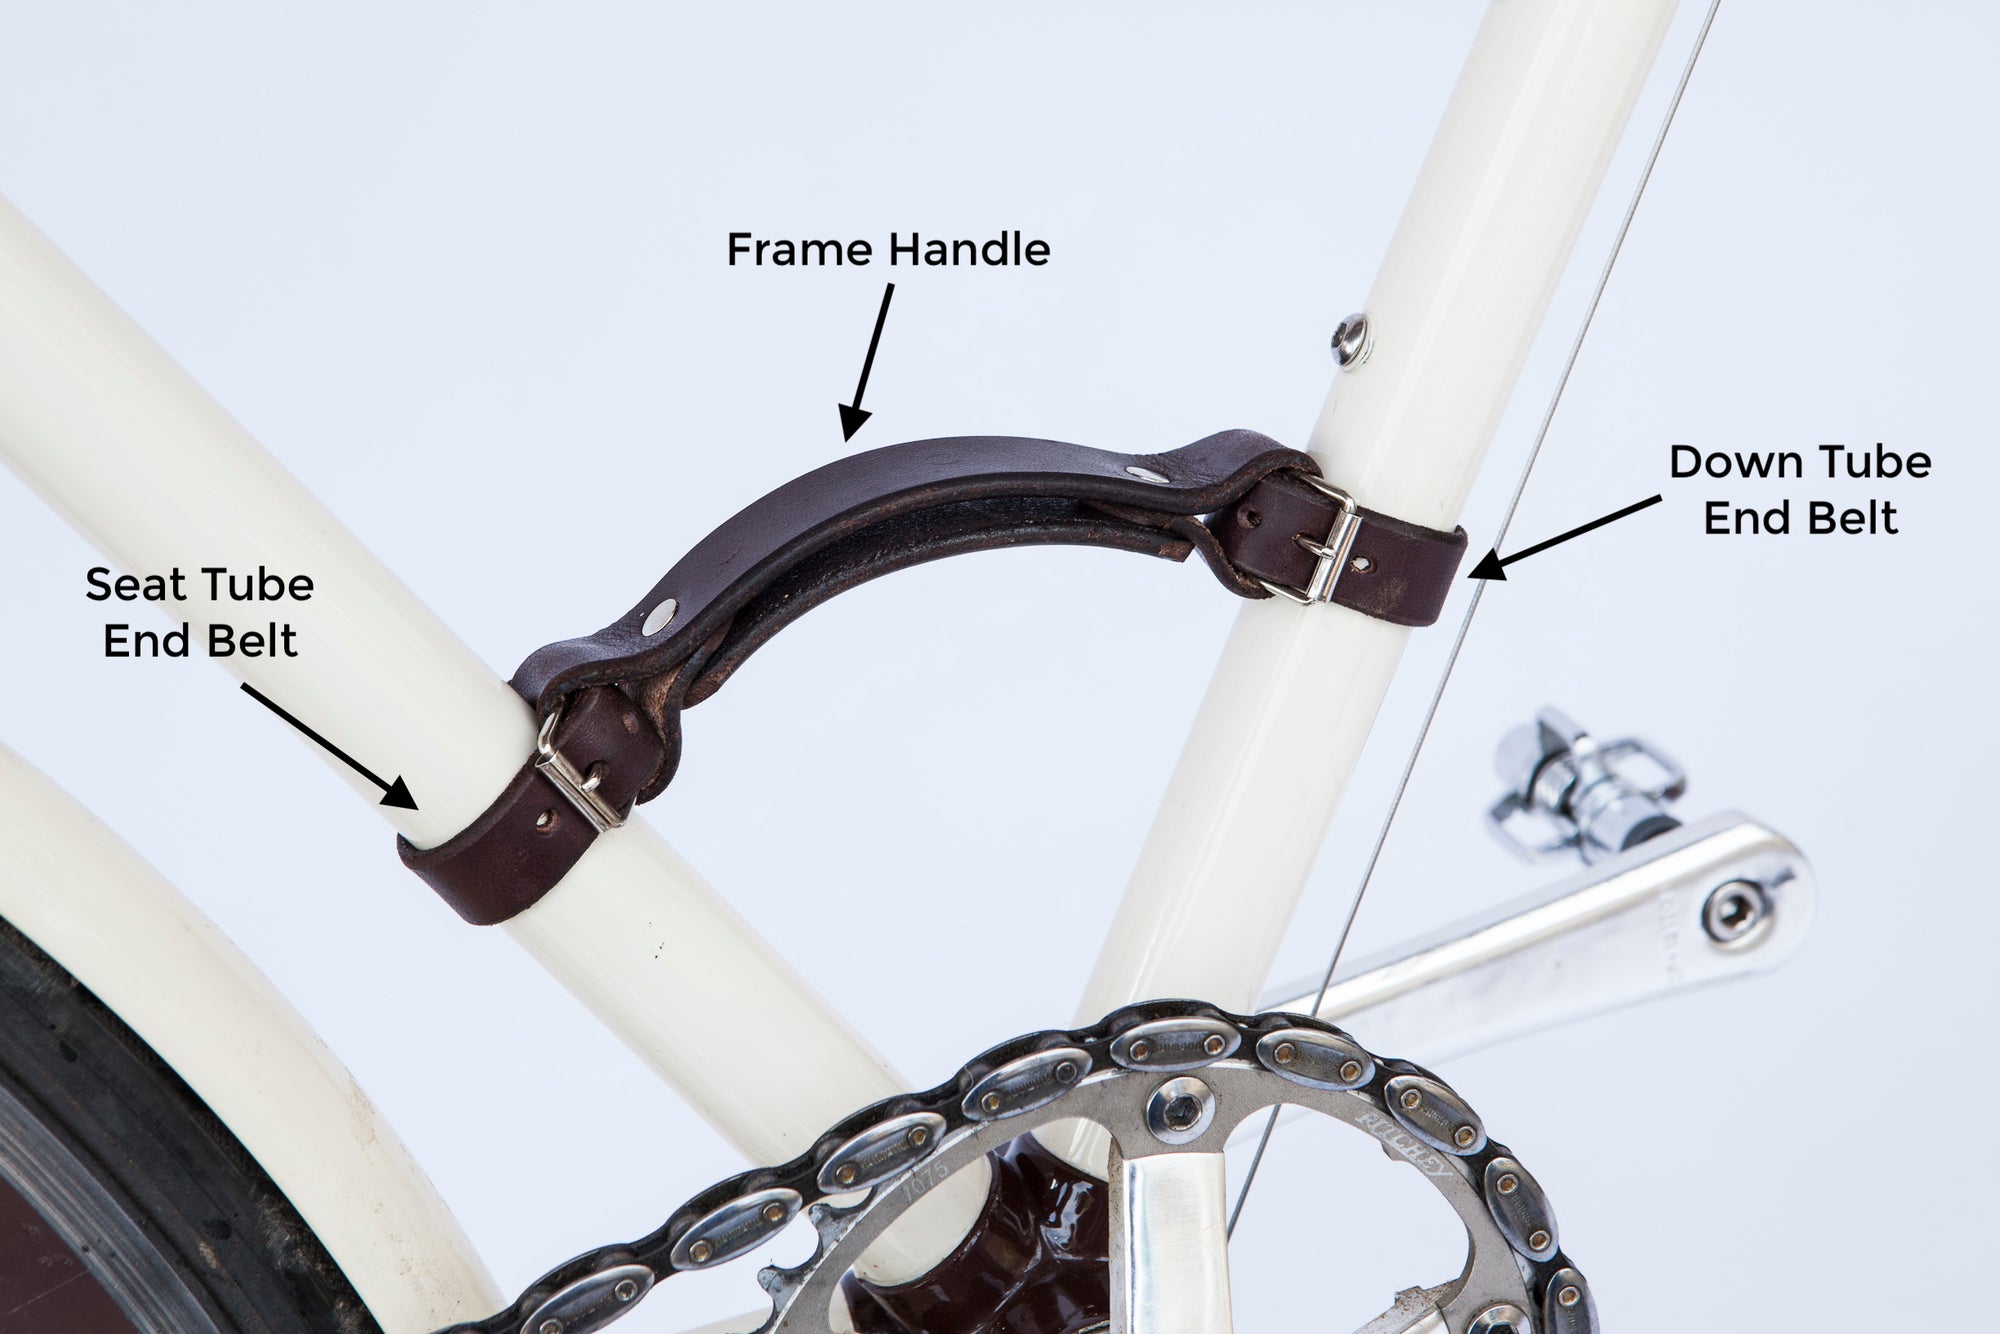 Understanding Bicycle Frame Handle Sizes: Regular vs Large